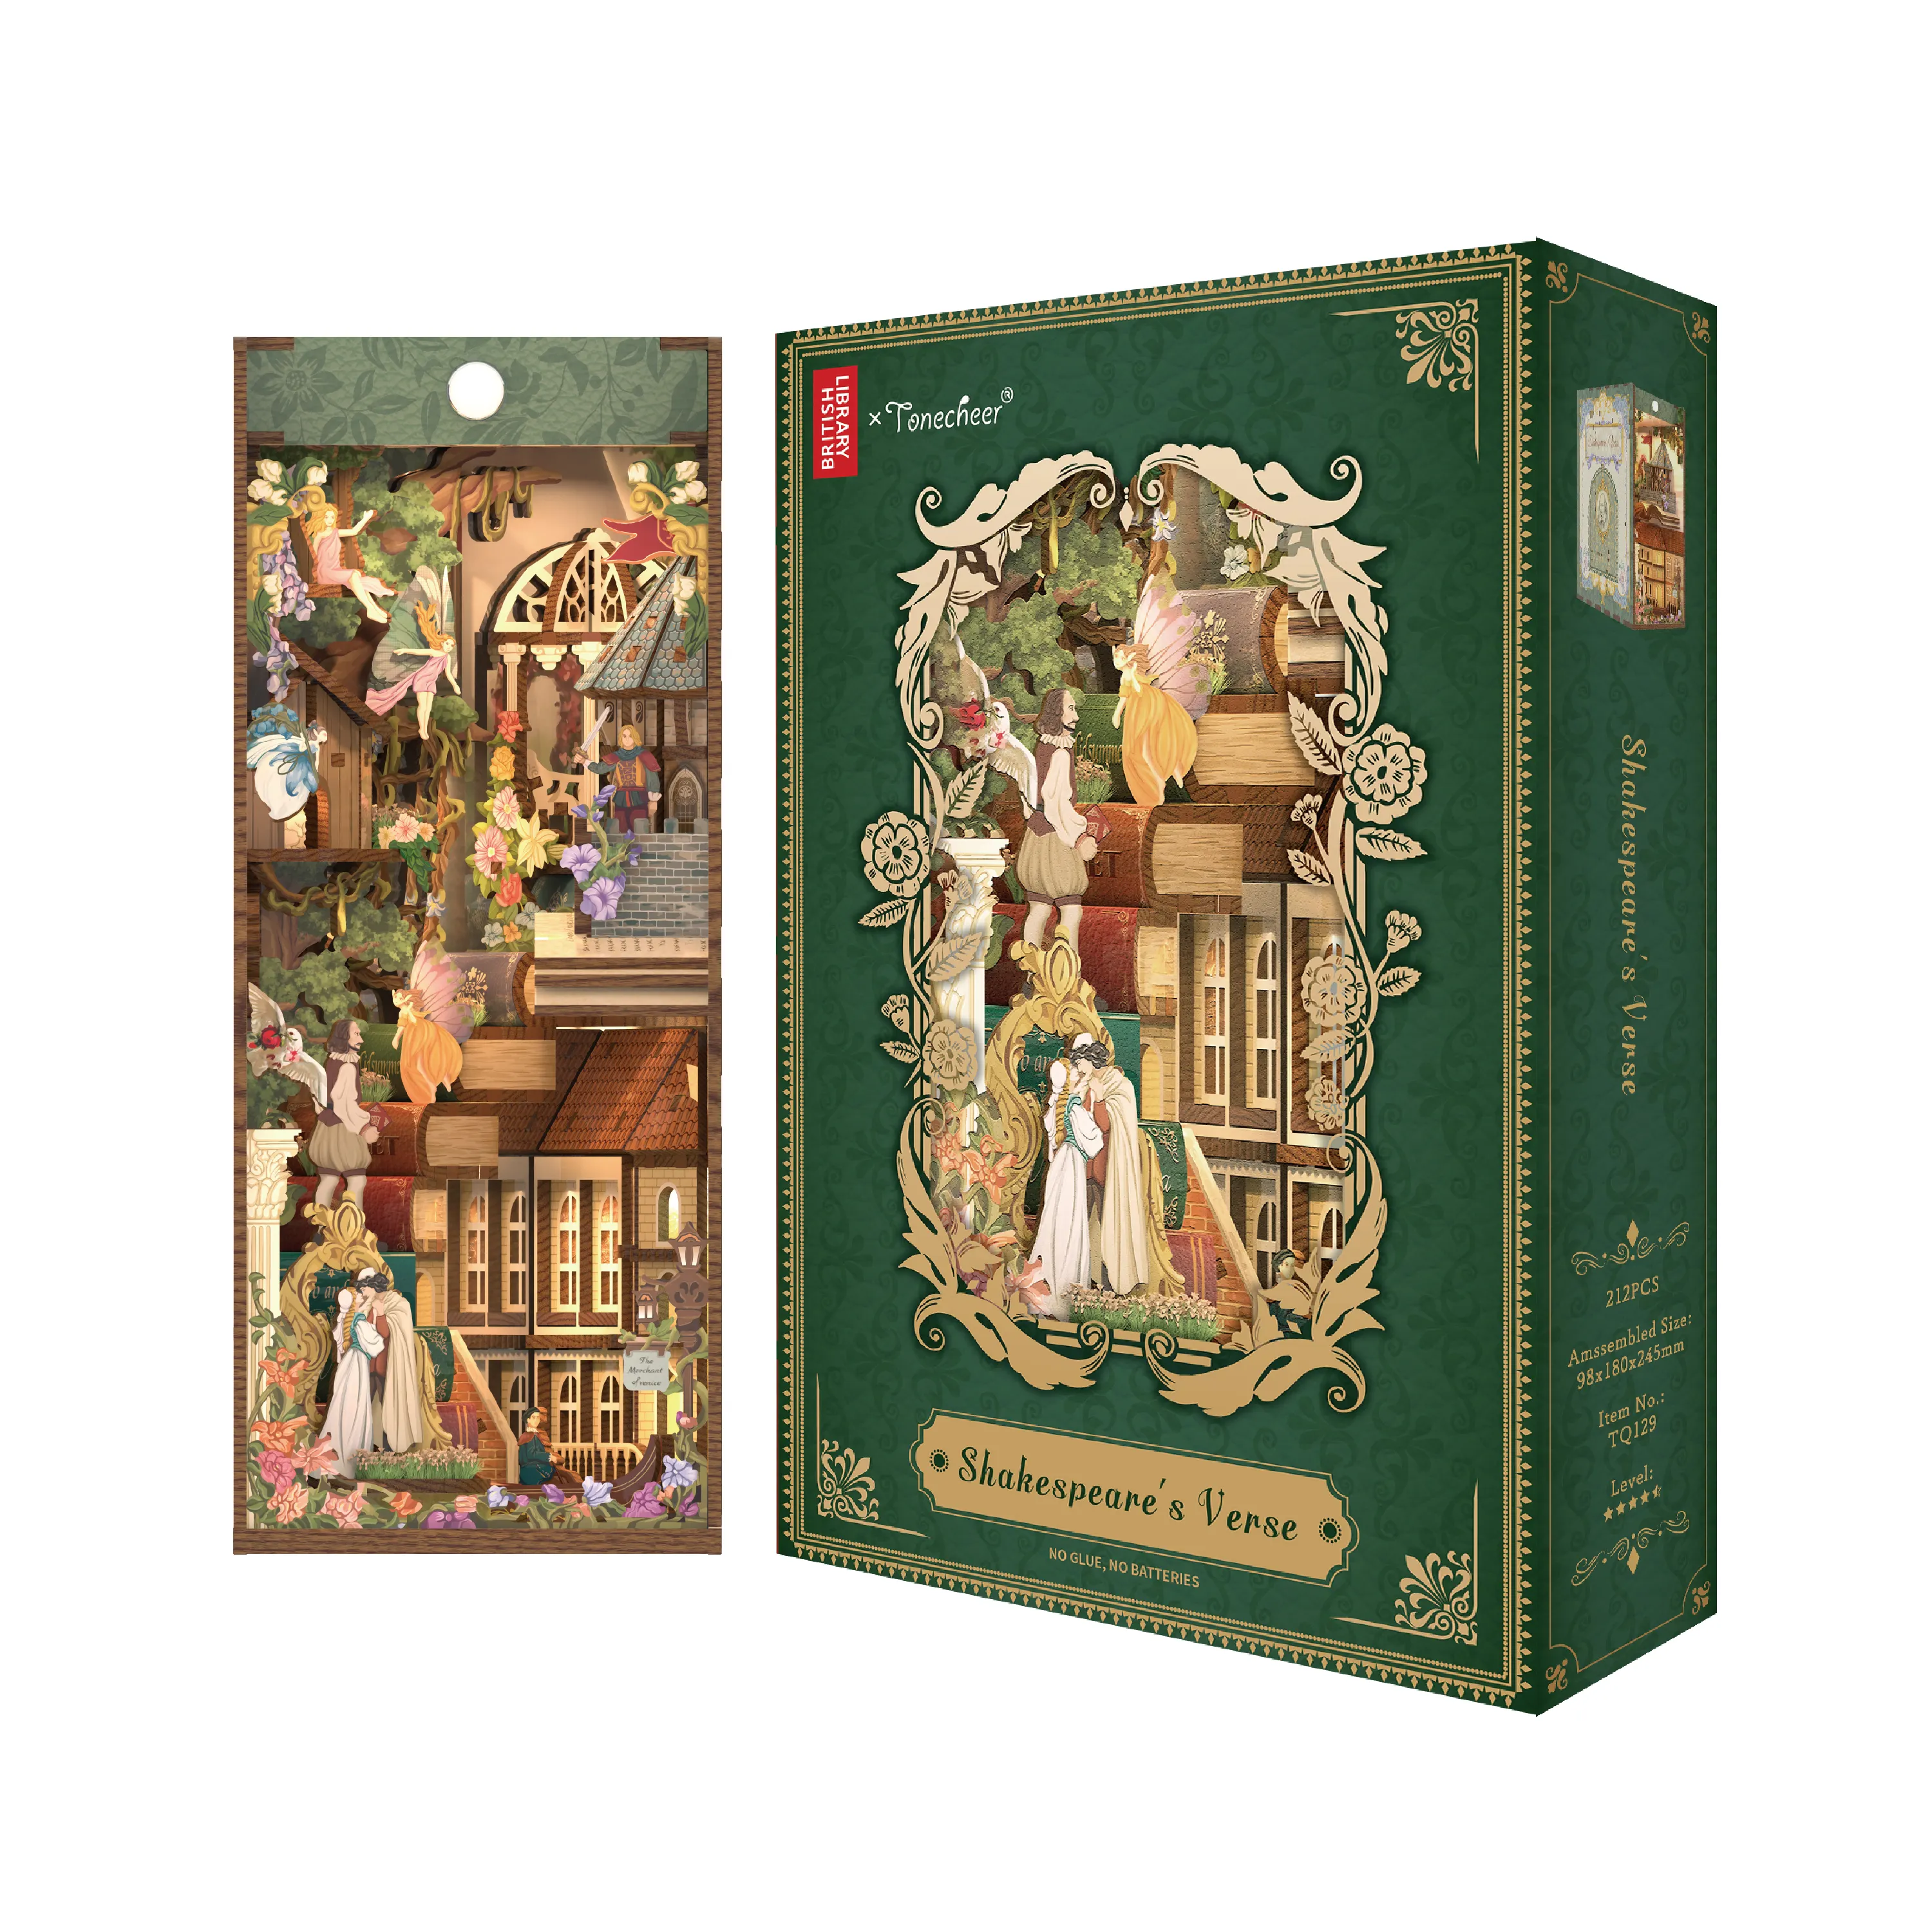 Tonecheer 2 단 속도 조명 모드 책 Nook 영국 도서관과 공동 브랜드 3D 퍼즐 셰익스피어의 구절 나무 장난감